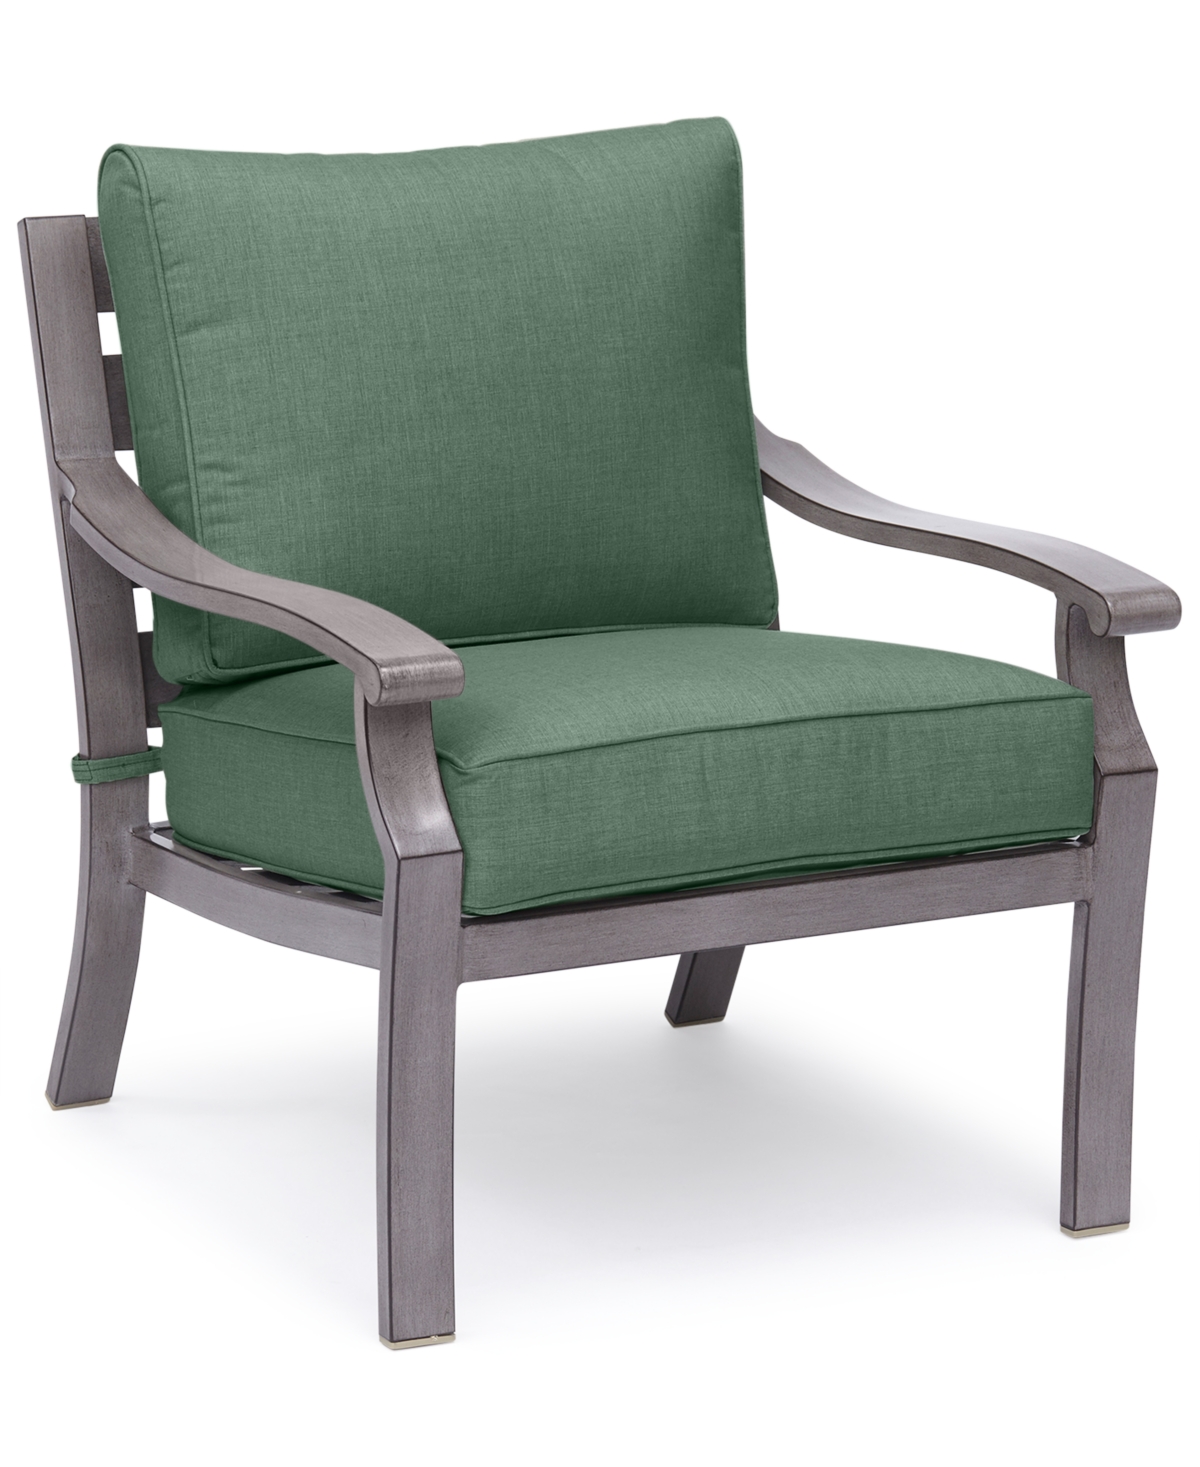 Agio Tara Aluminum Outdoor Rocker Chair, Created For Macy's In Outdura Grasshopper